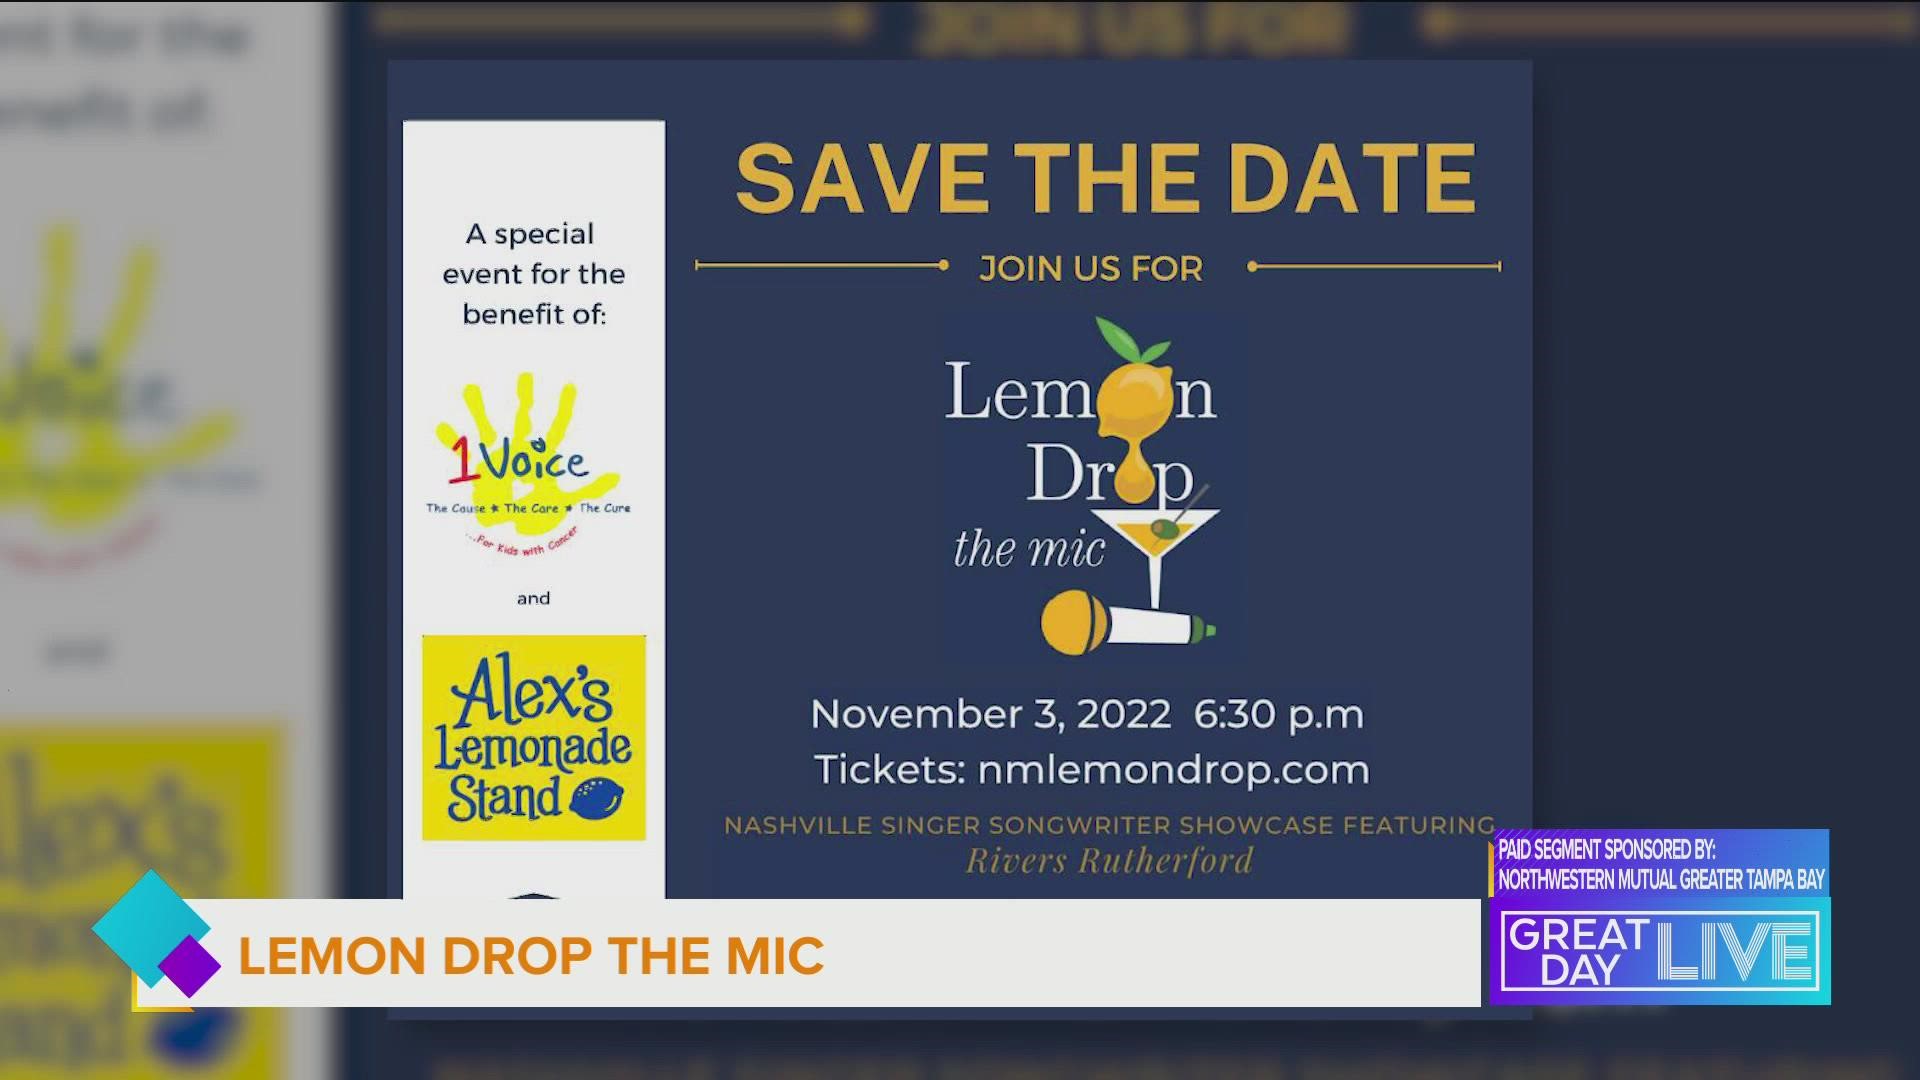 Lemond Drop the Mic fundraiser to benefit pediatric cancer organizations